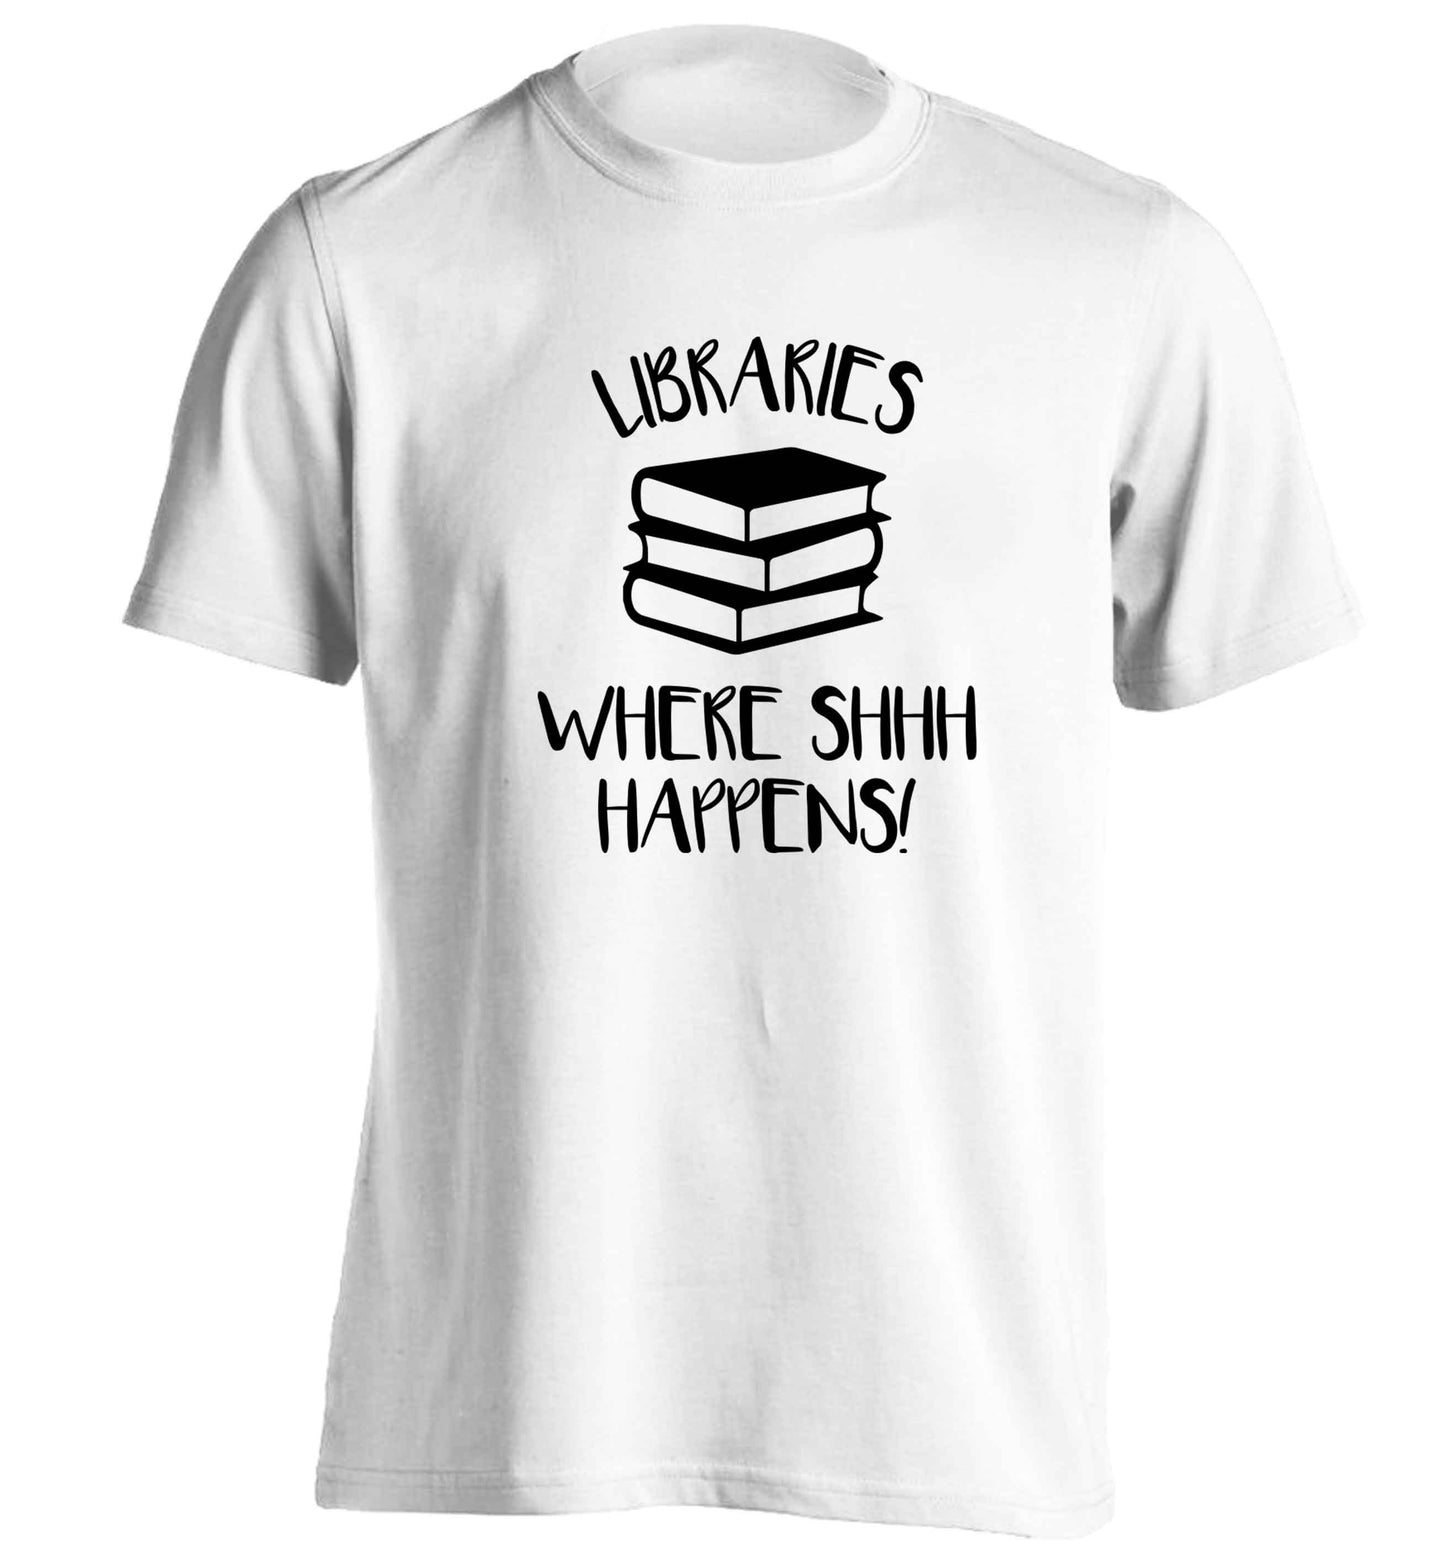 Libraries where shh happens! adults unisex white Tshirt 2XL